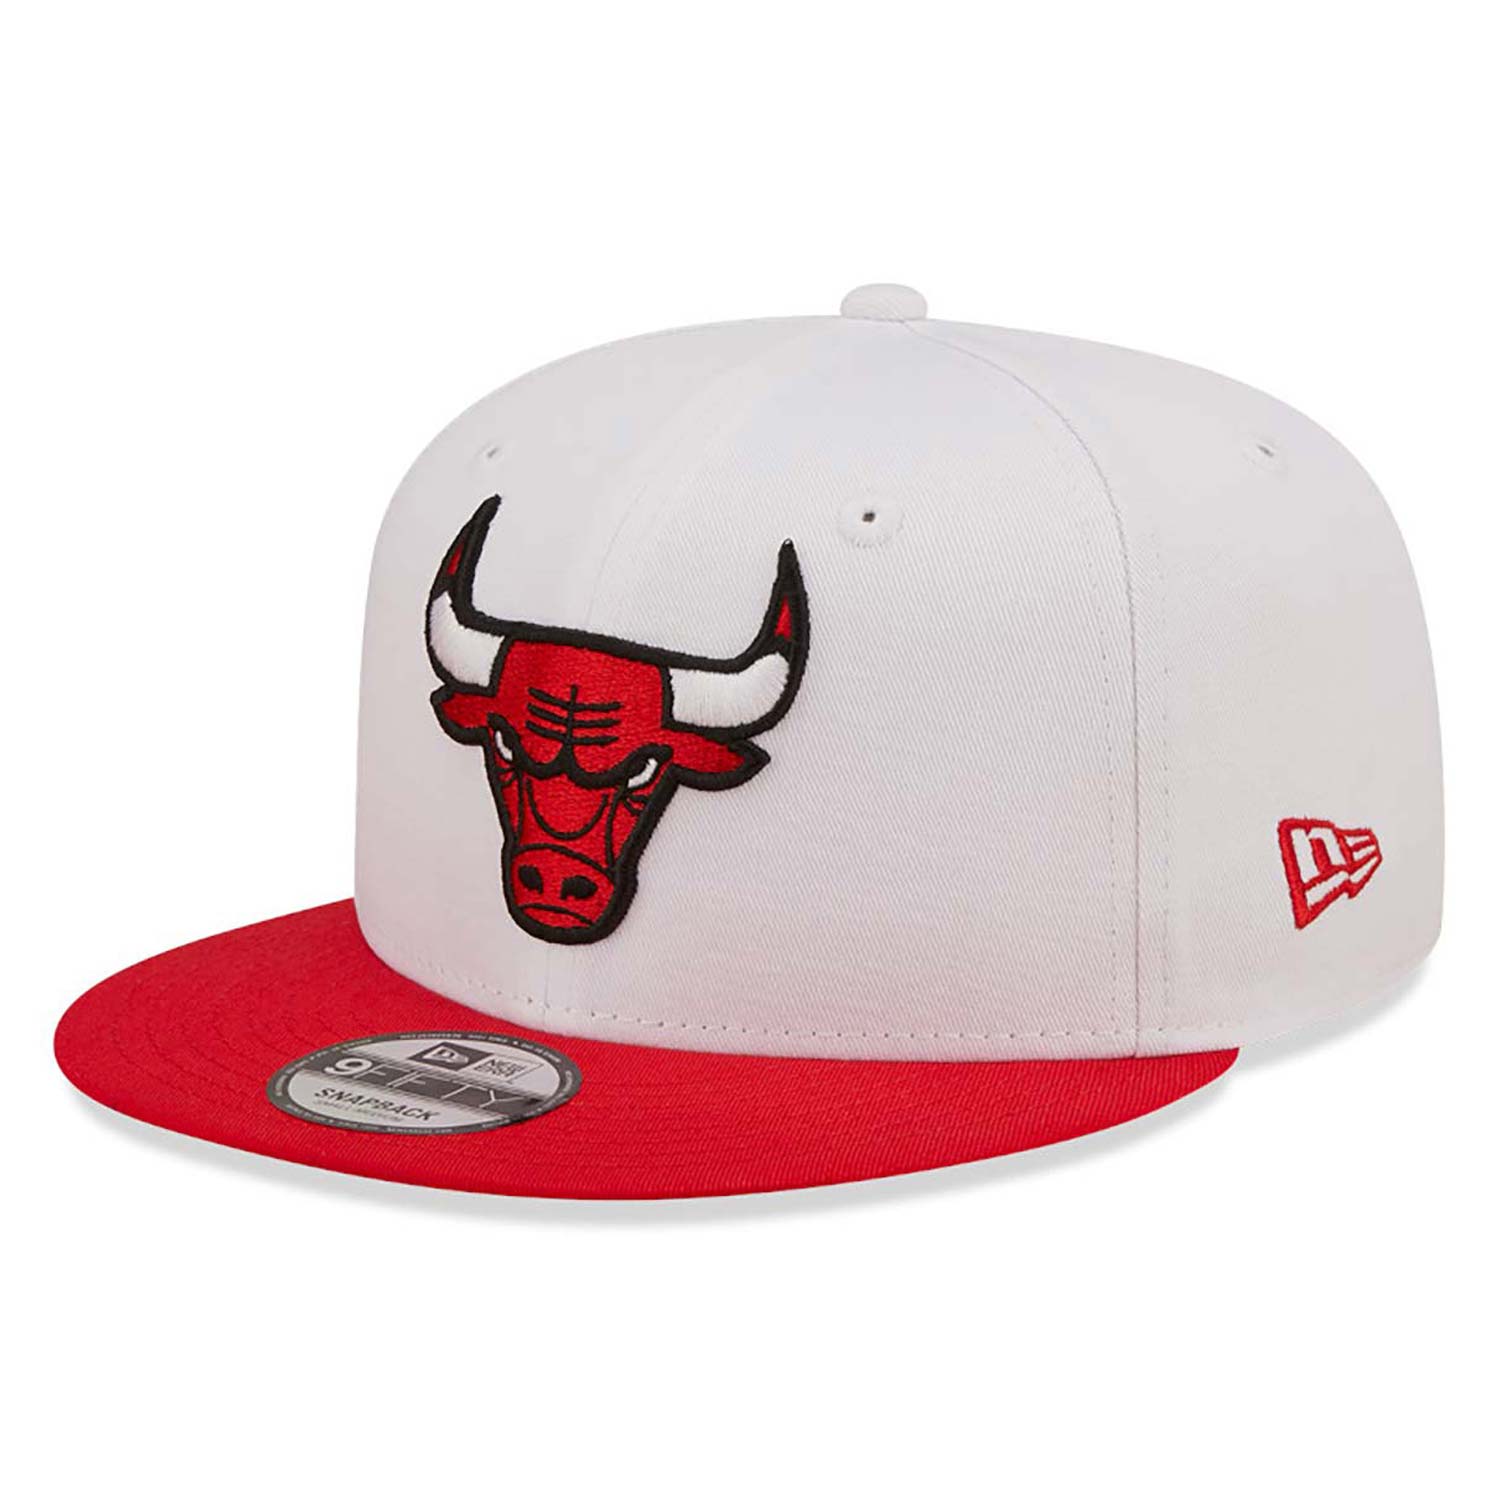 Chicago Bulls Red New Era 9FIFTY Snapback